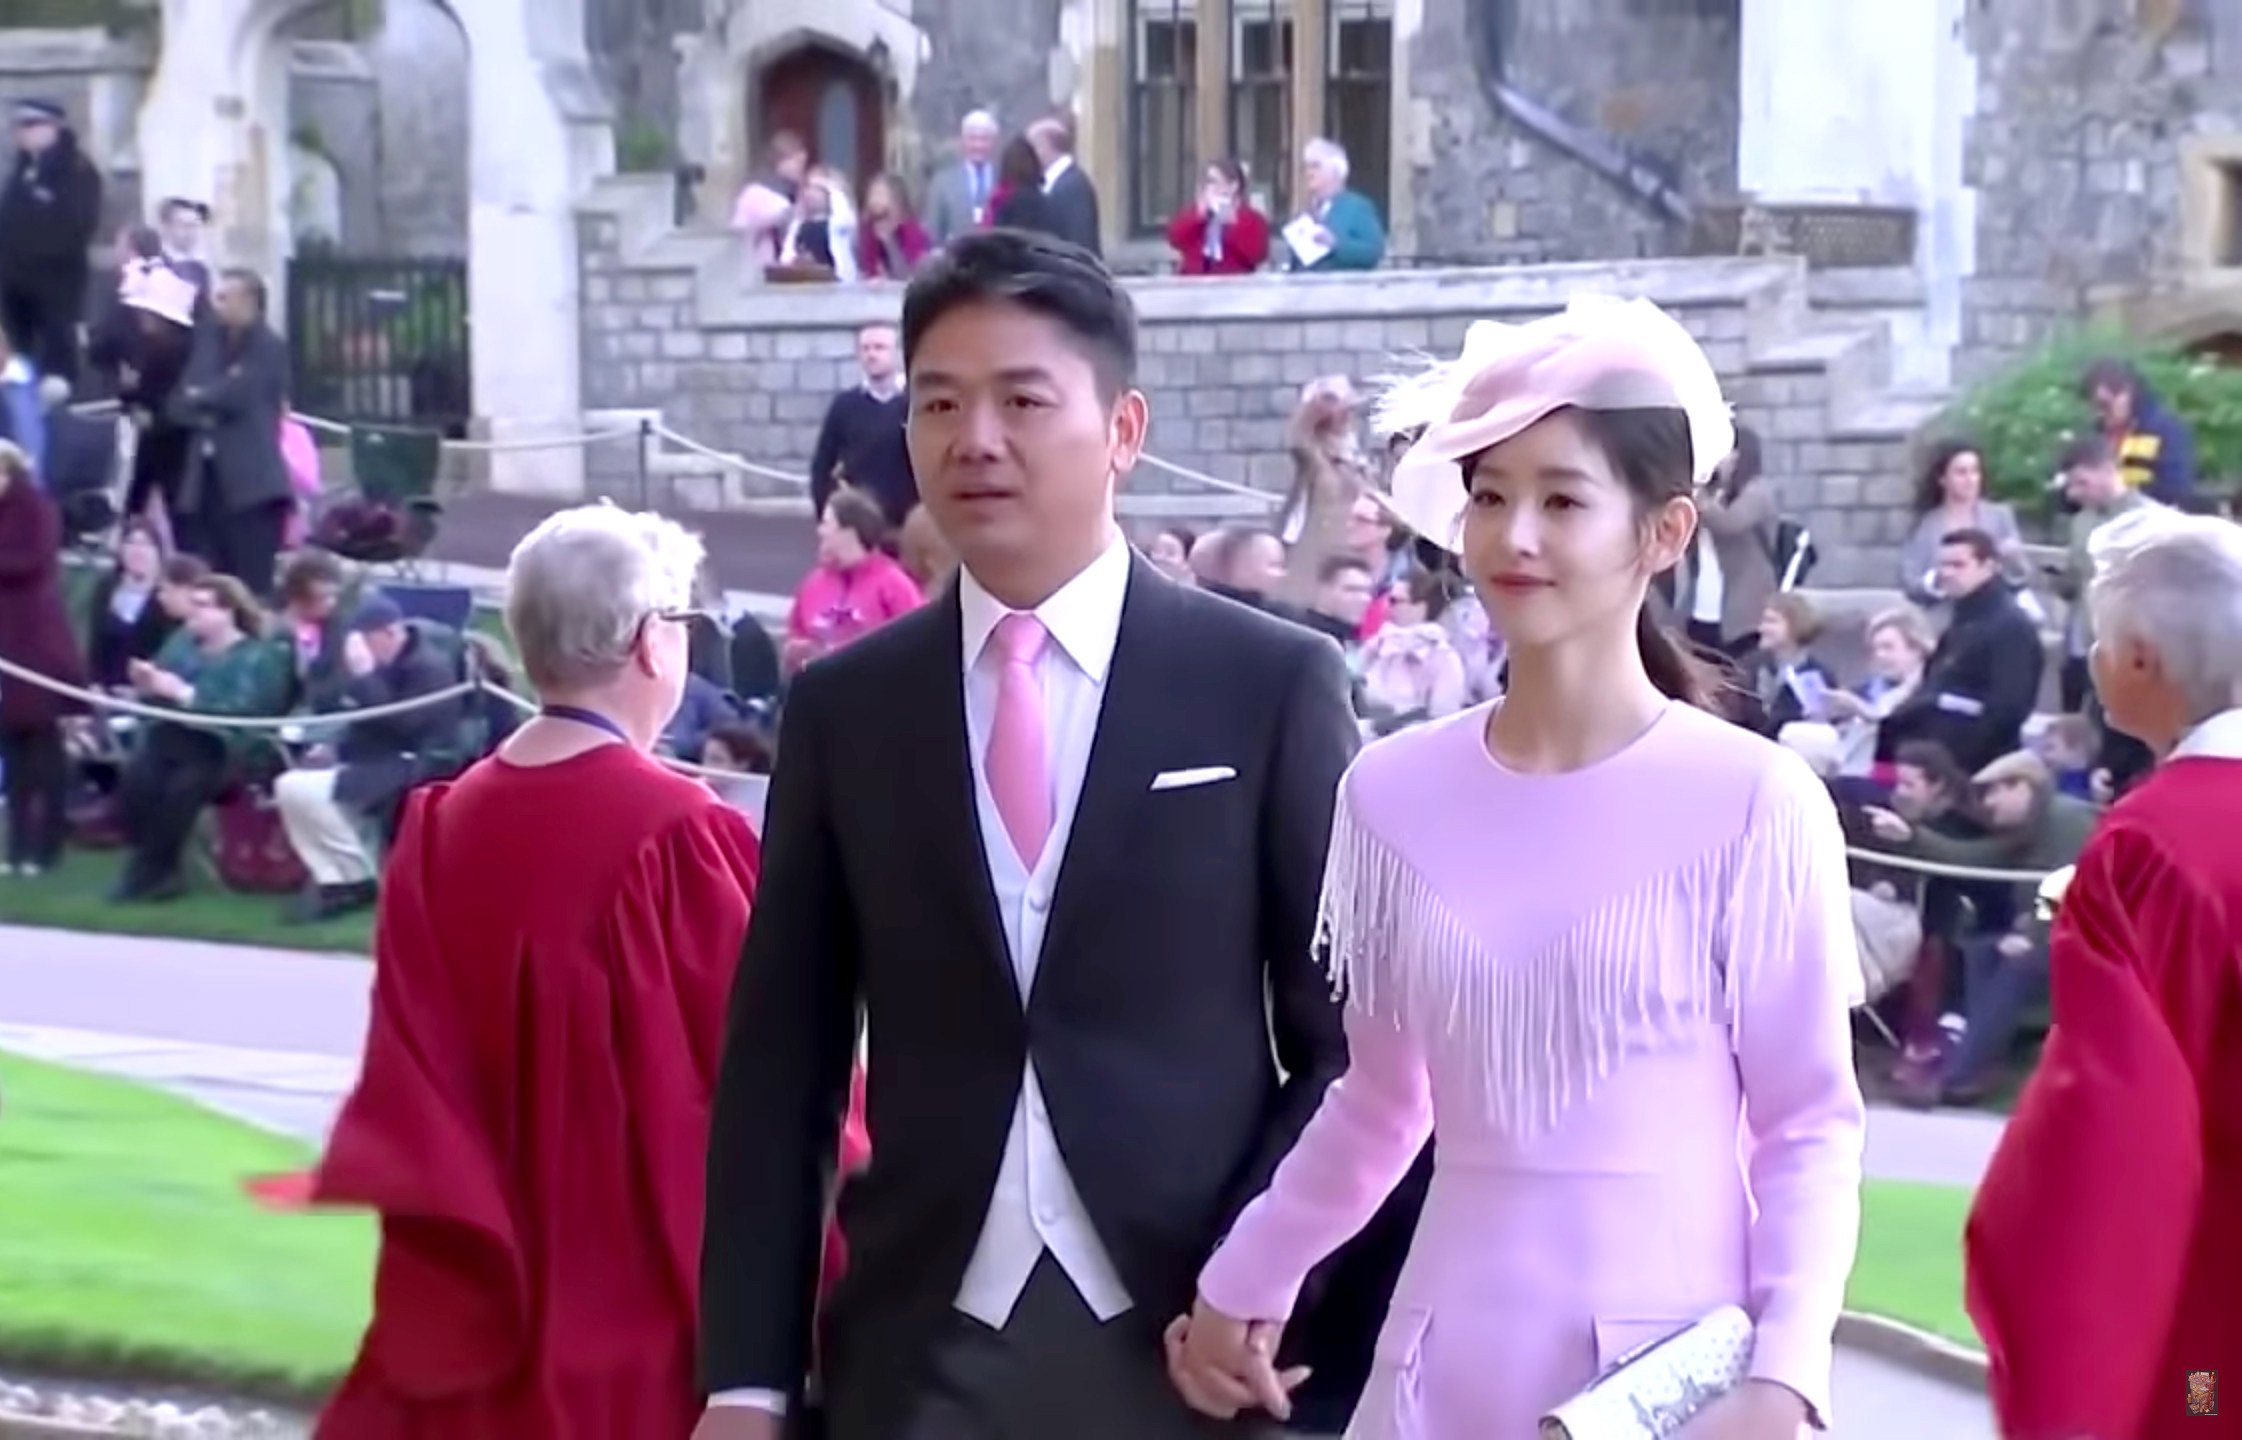 JD.com chairman Richard Liu Qiangdong and wife Zhang Zetian at Princess Eugenie’s wedding. Photo: YouTube